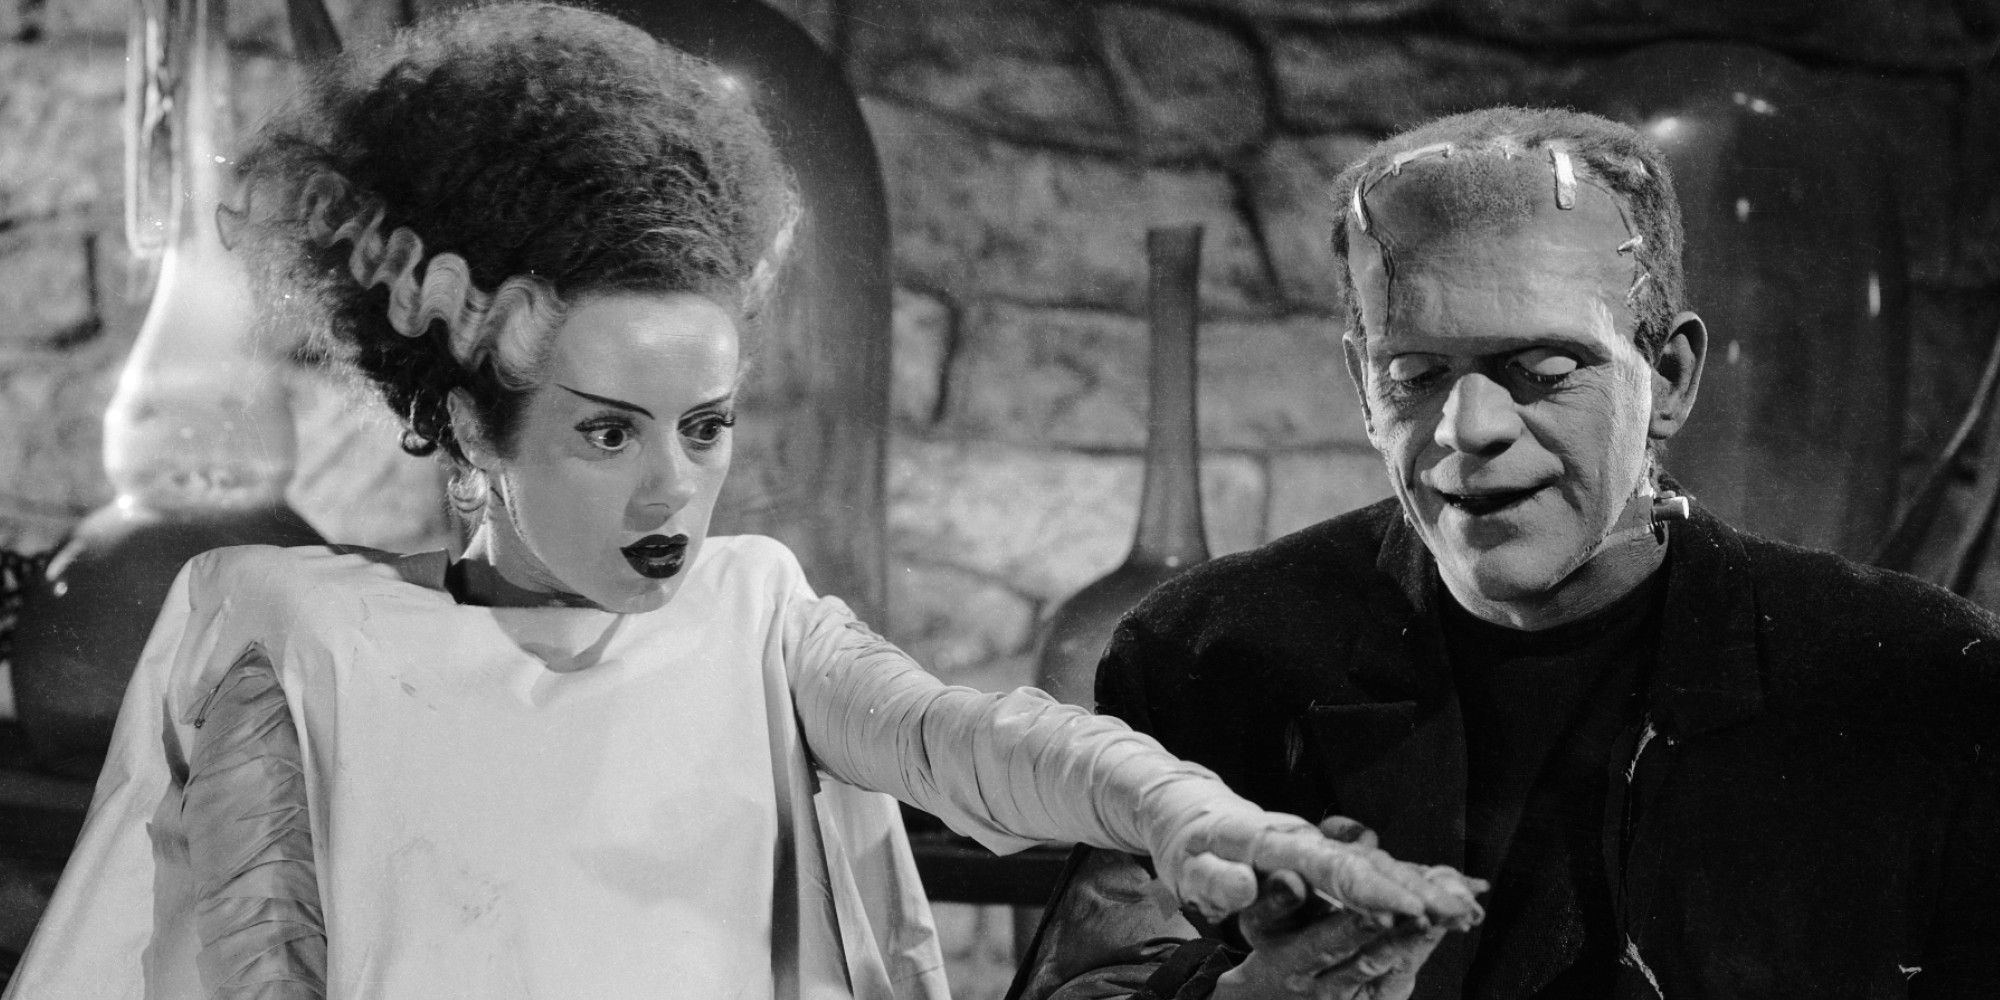 Boris Karloff and Elsa Lanchester in 'The Bride of Frankenstein'